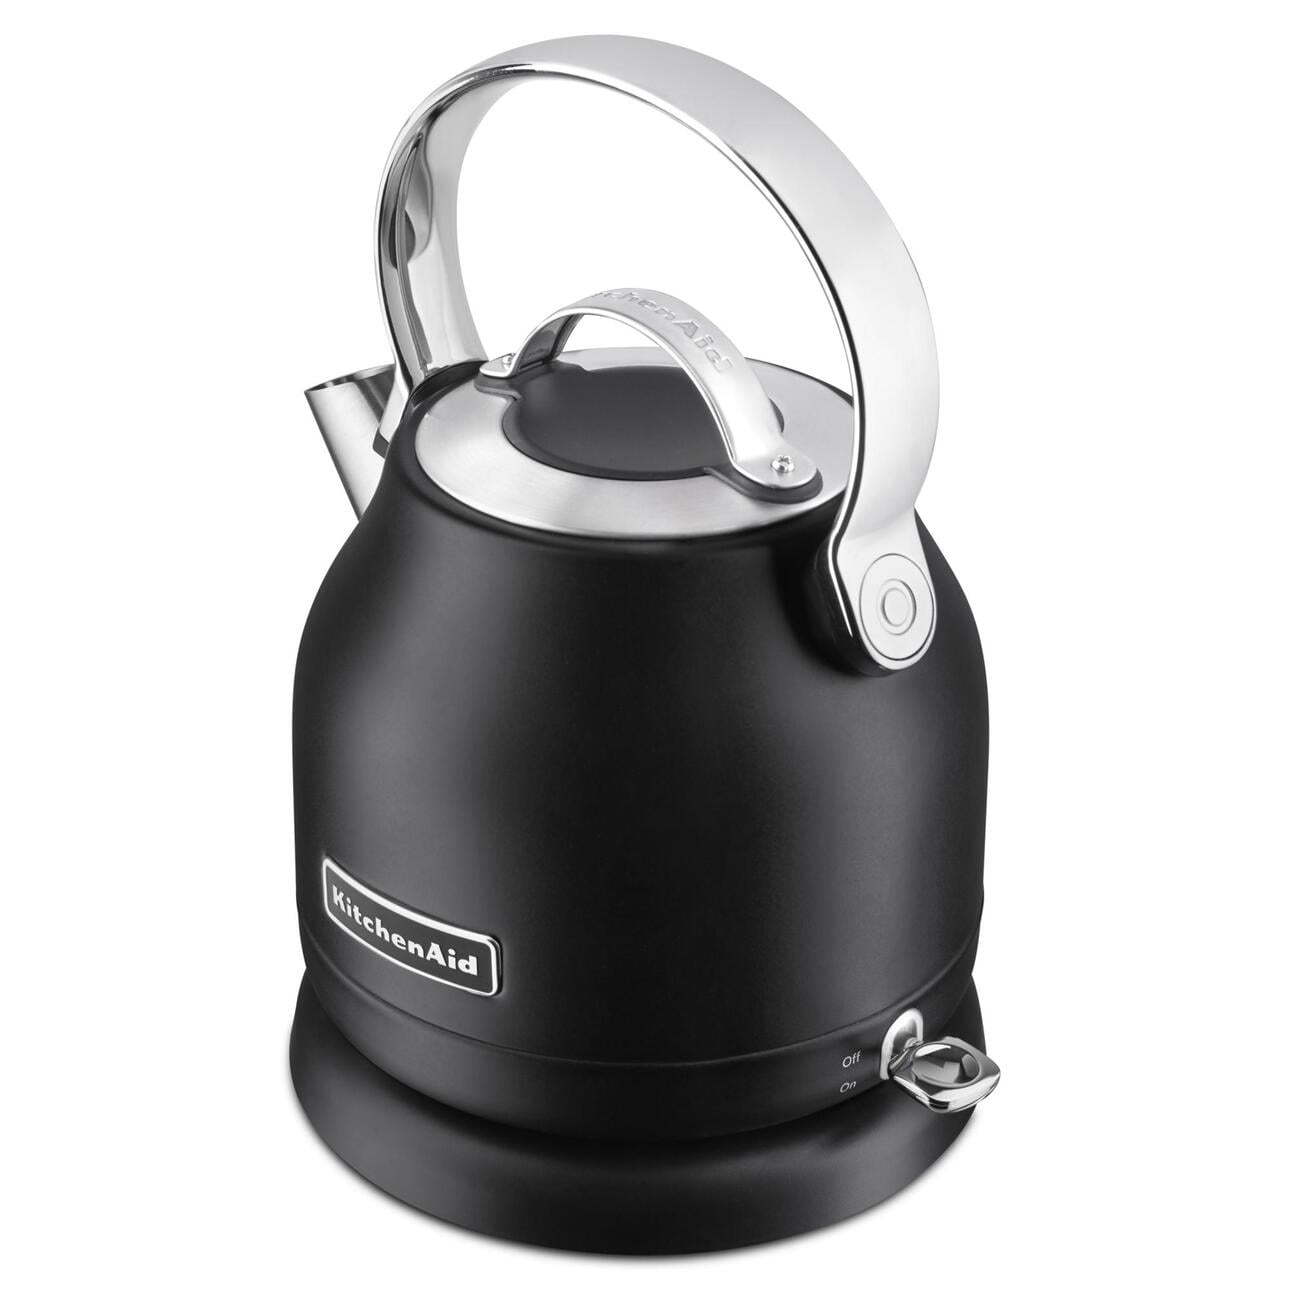 KitchenAid KEK1222 electric kettle has a removable limescale filter »  Gadget Flow